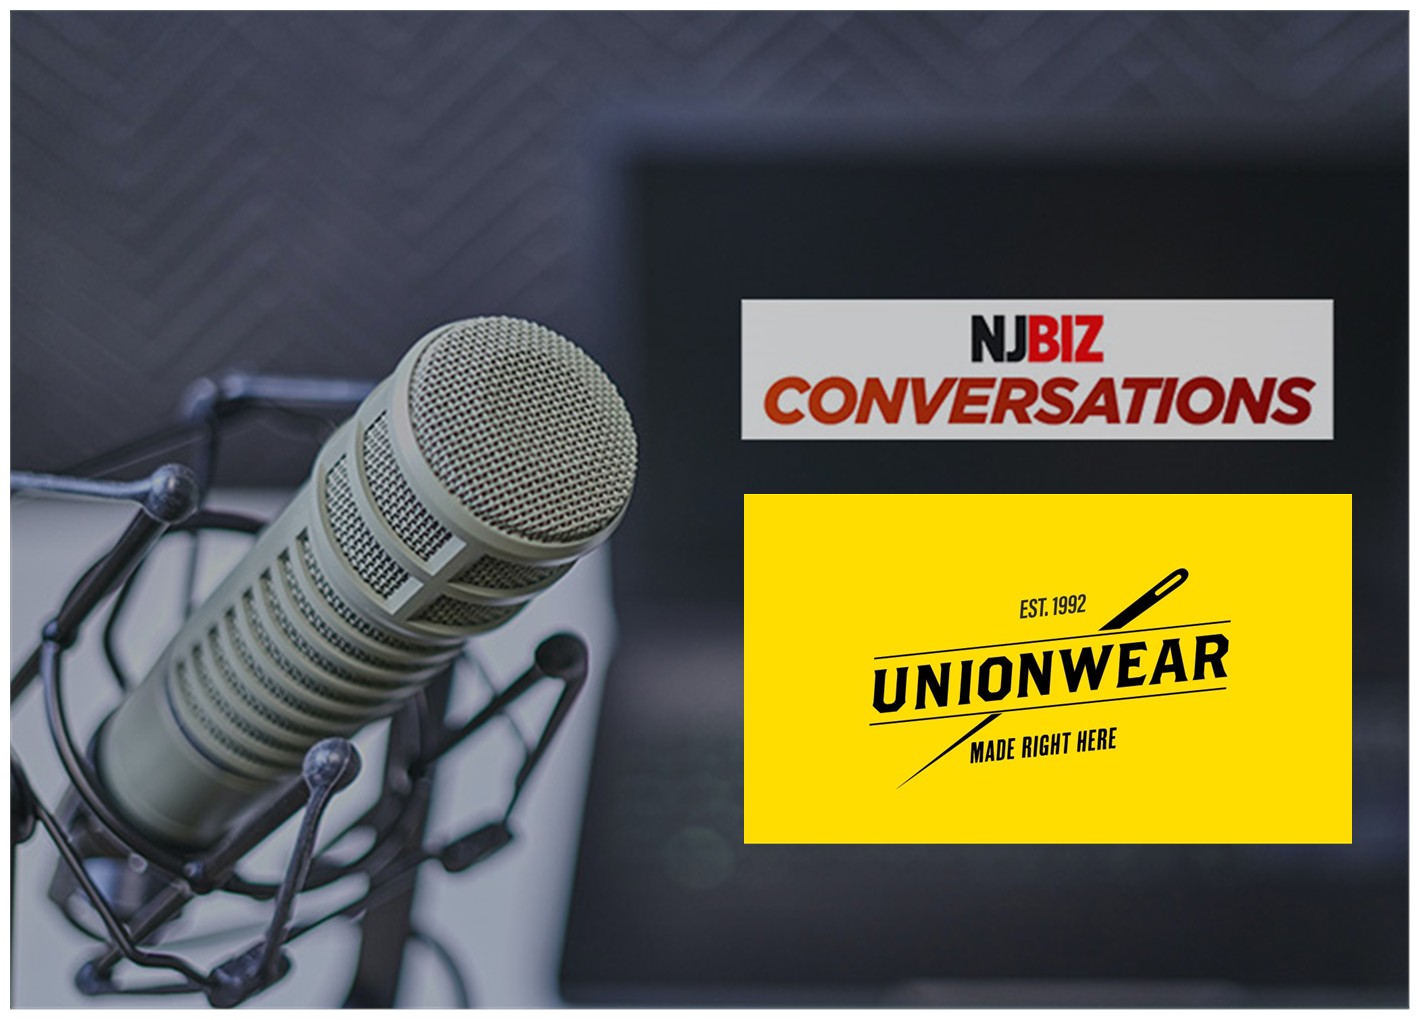 NJBiz Conversations with Unionwear